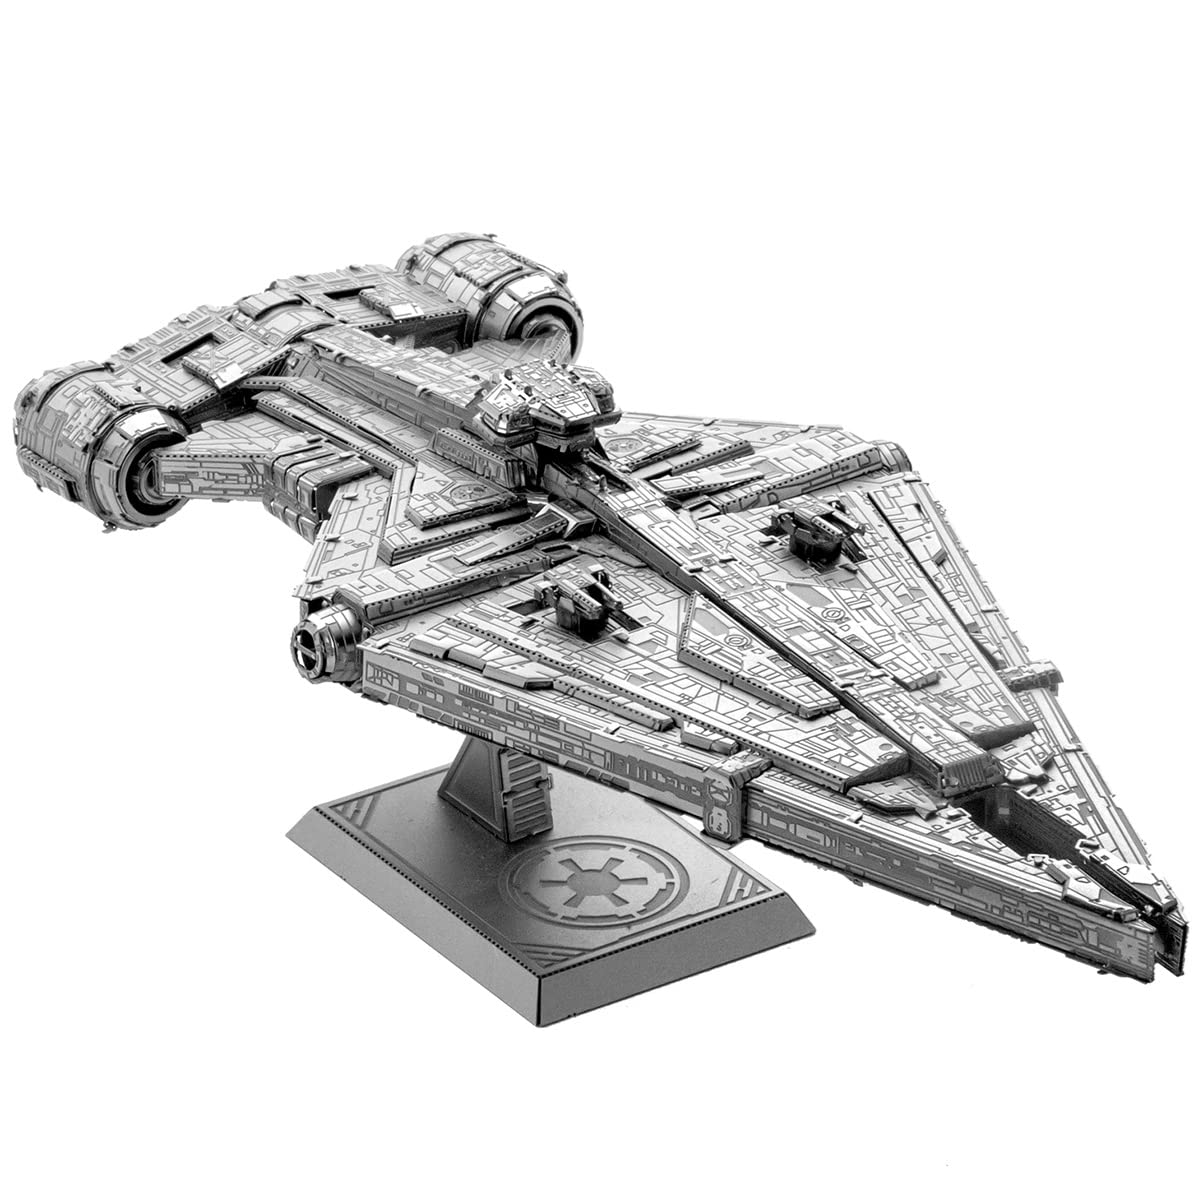 Metal Earth Fascinations Premium Series Star Wars Imperial Light Cruiser 3D Metal Model Kit